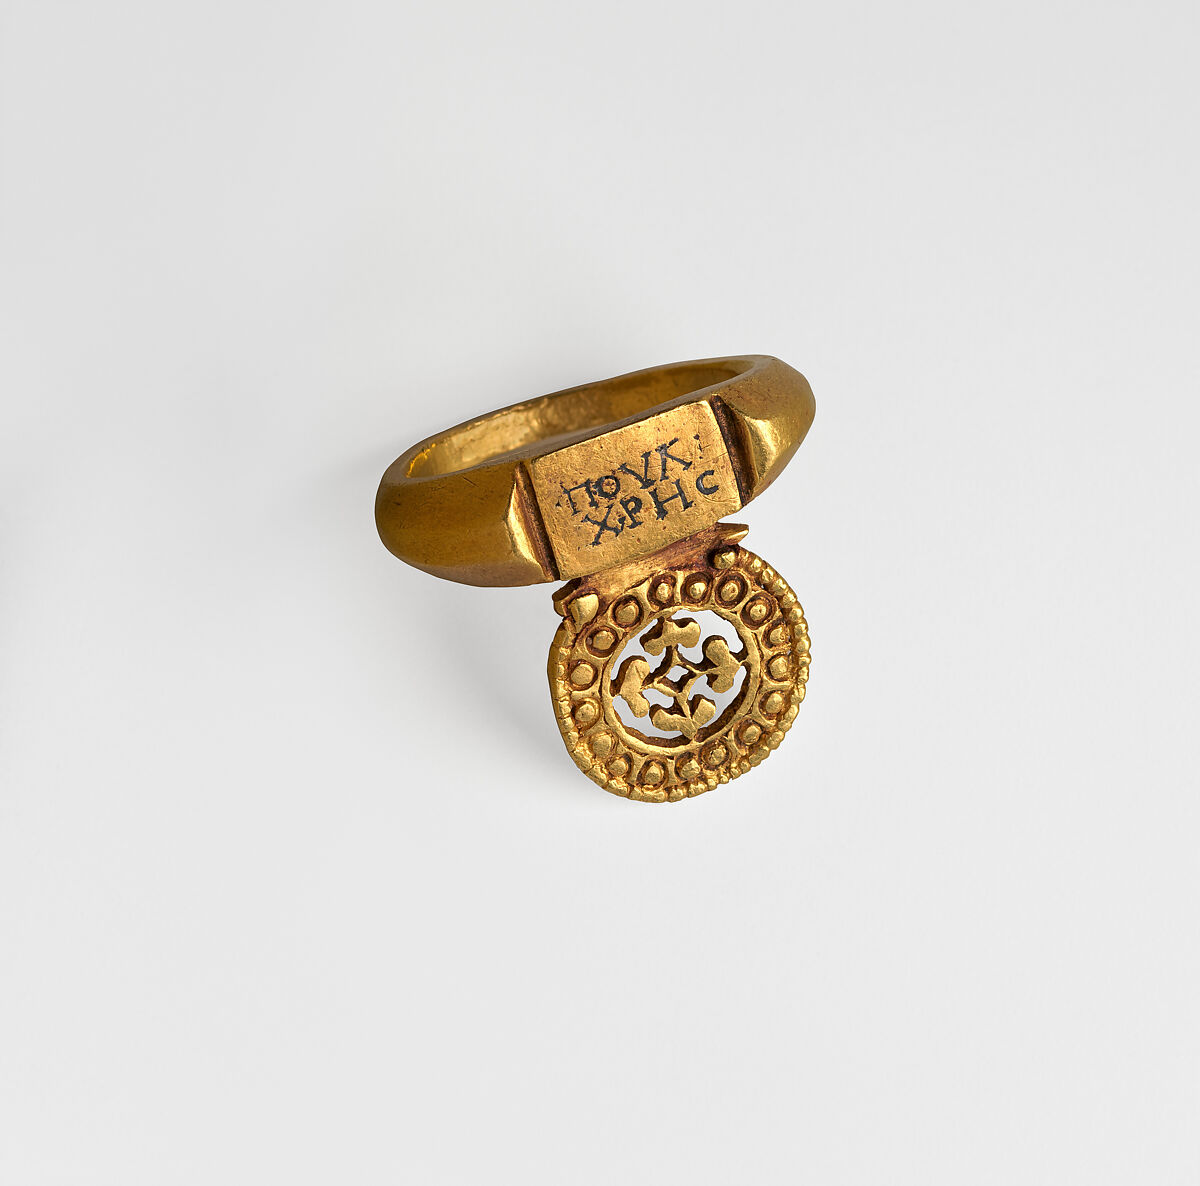 Roman Key Ring with Inscription, Gold, Byzantine